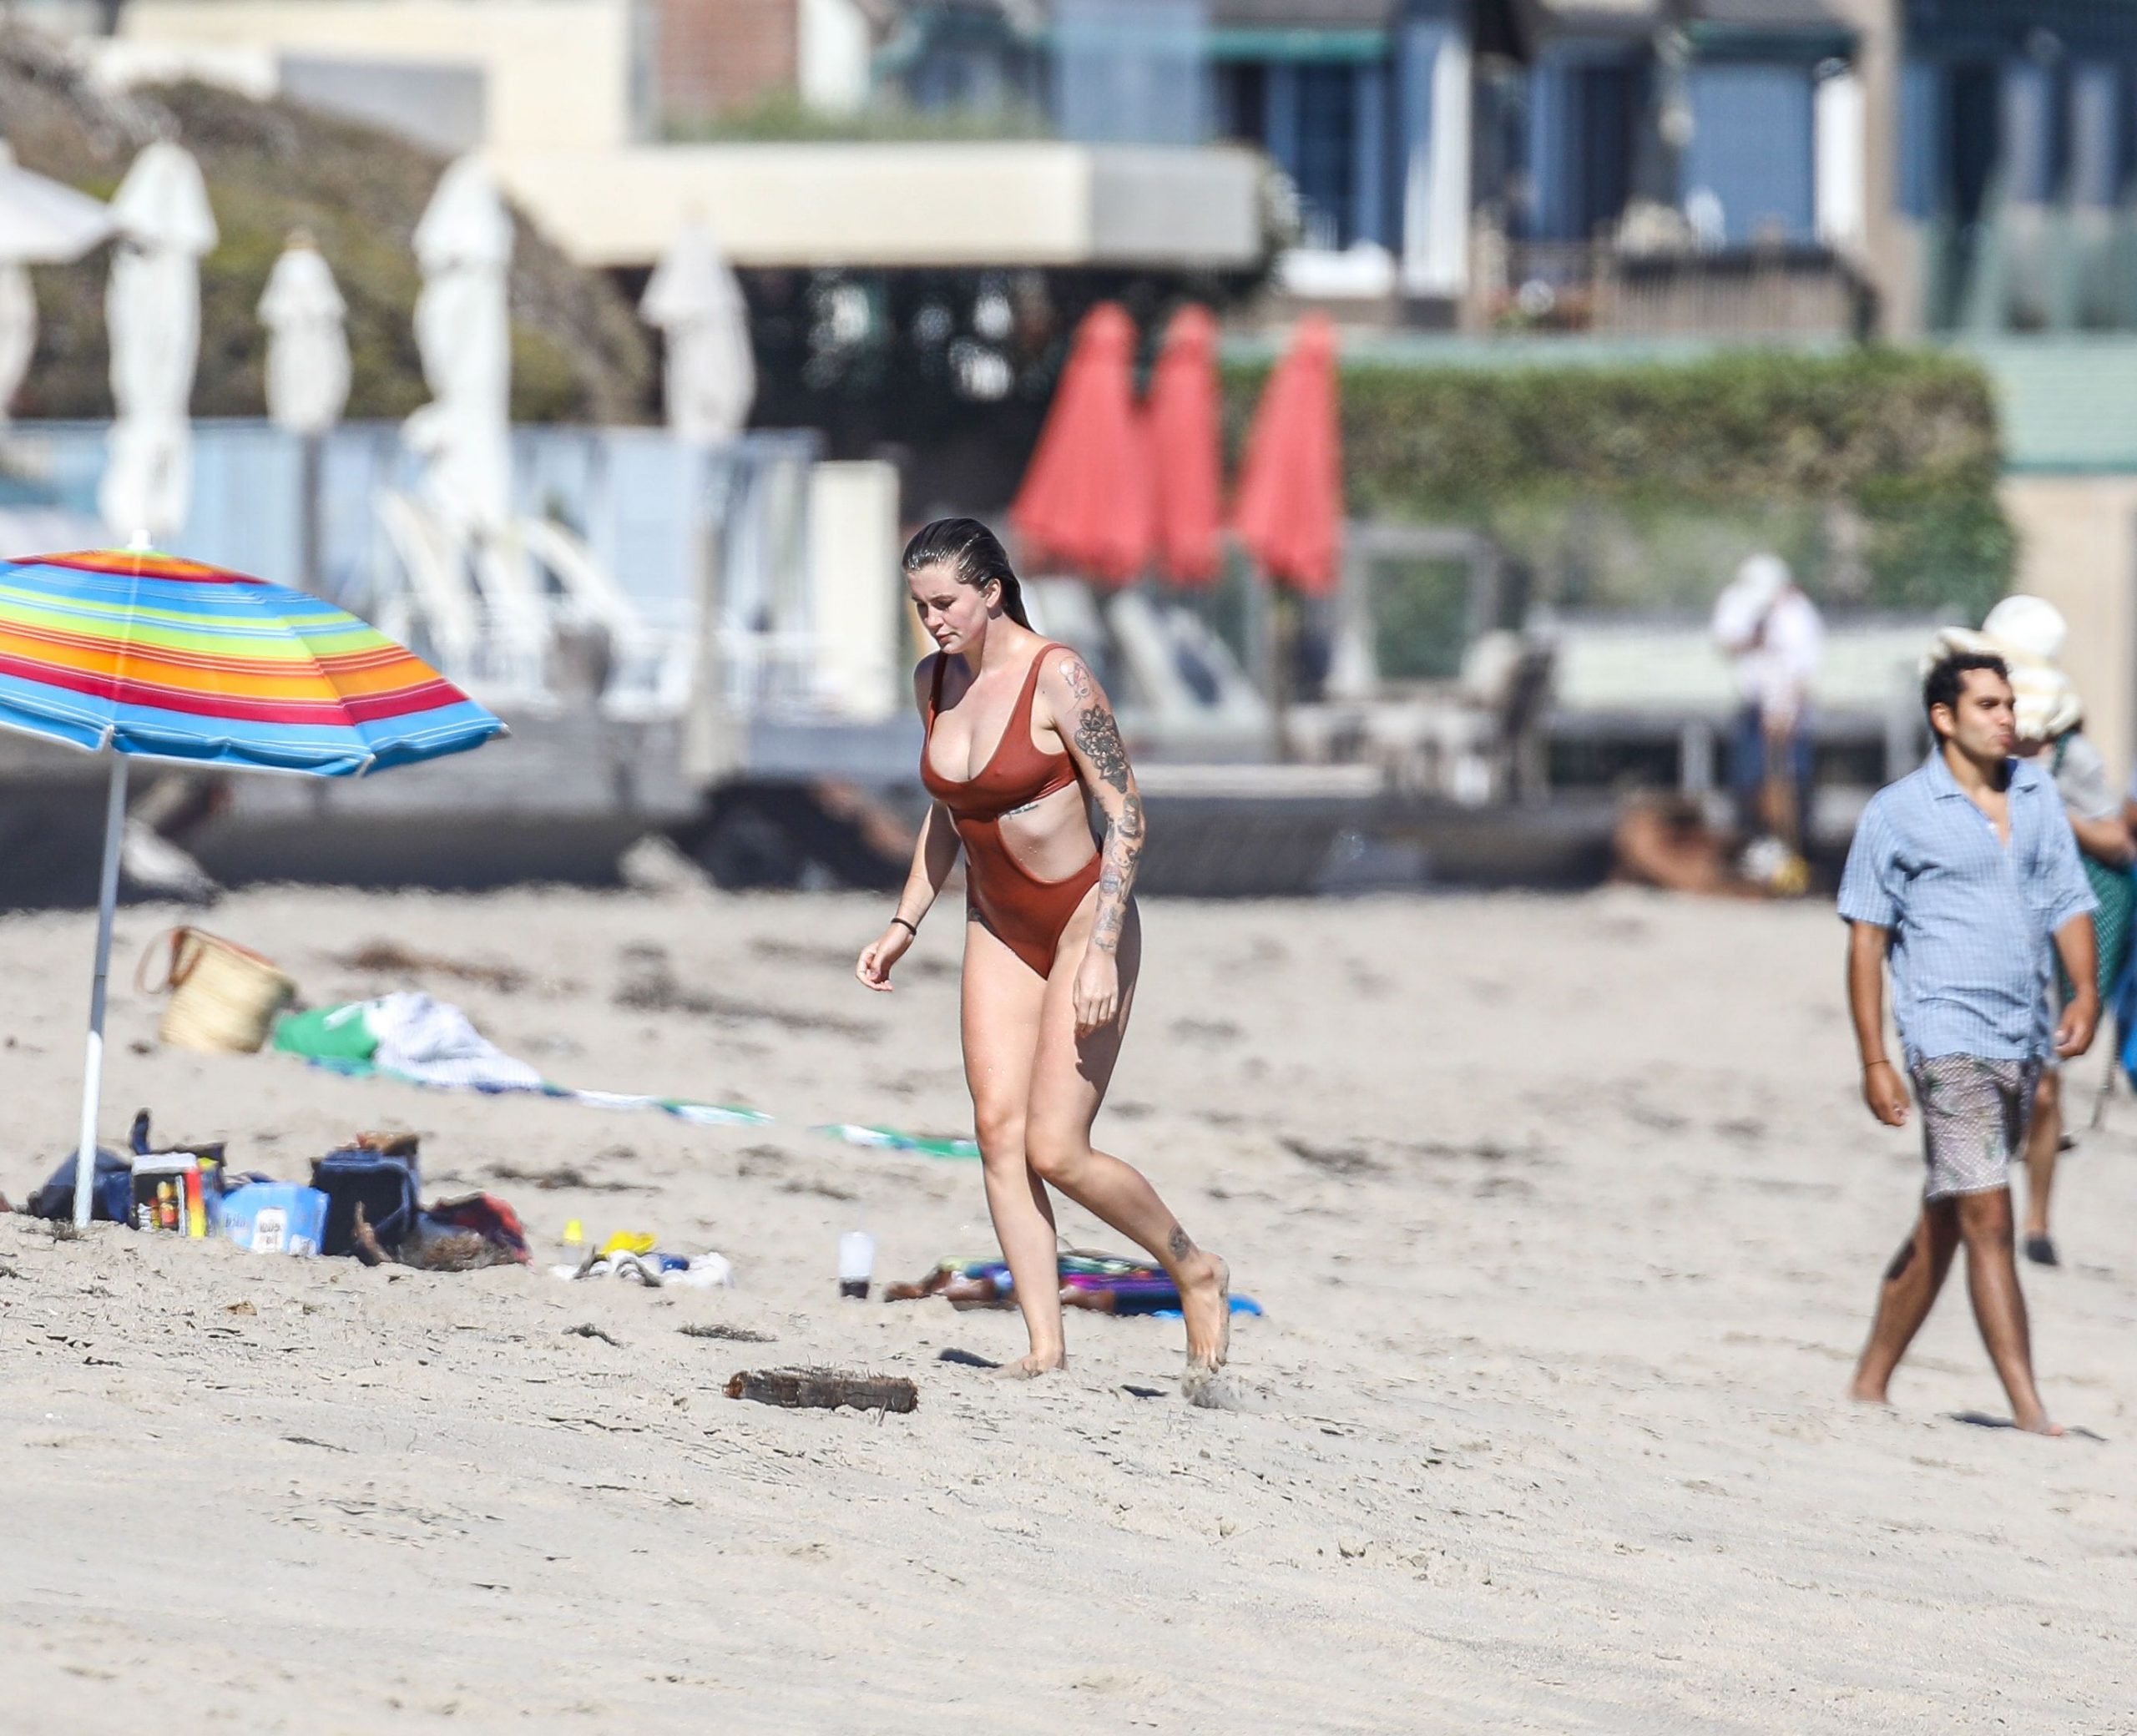 Ireland Baldwin Shows Off Her Pokies on the Beach (62 Photos)